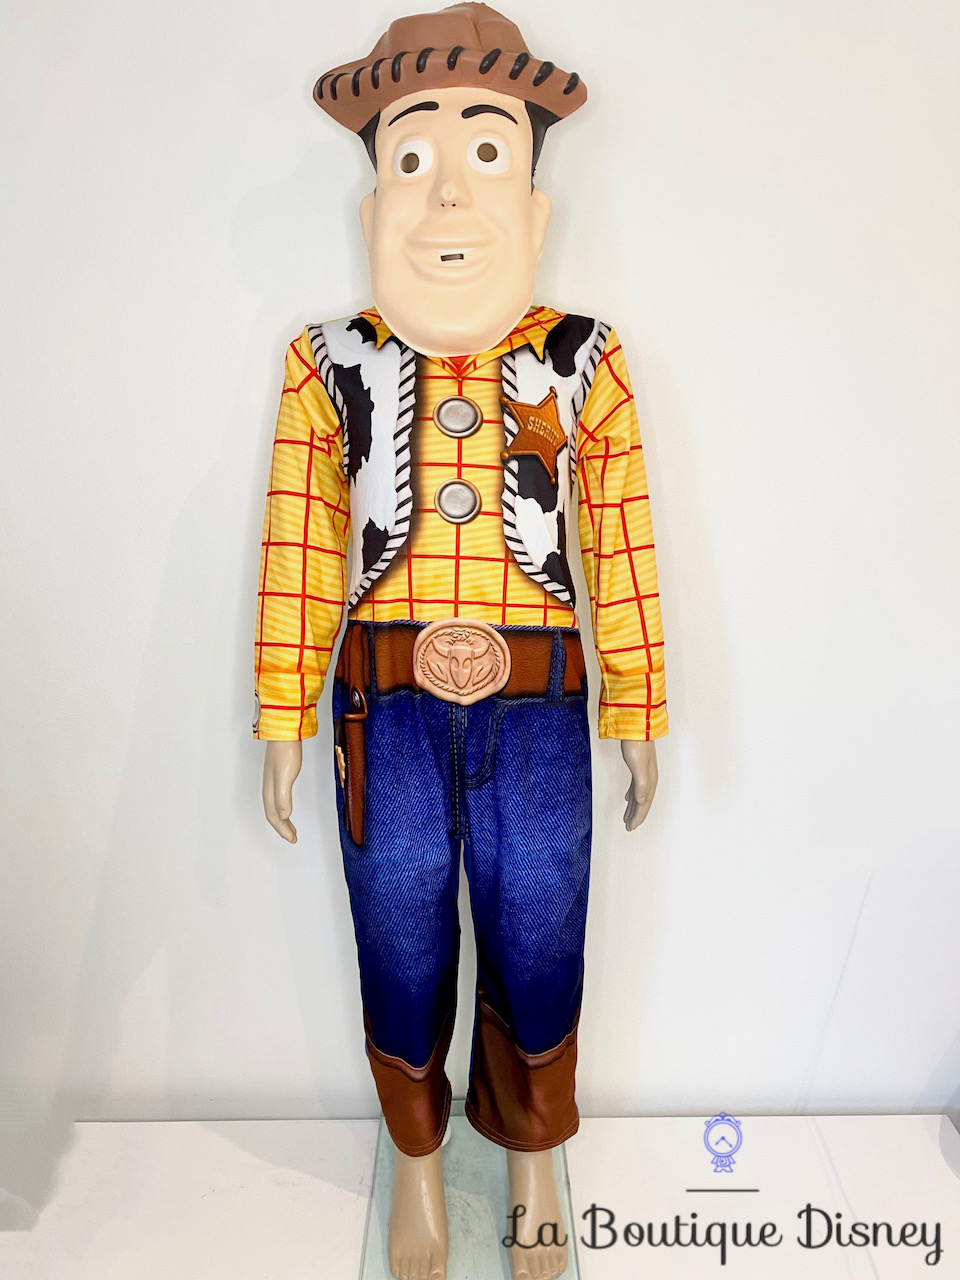 Déguisement Woody Toy Story Disney Rubies Costume taille 3-4 ans masque cow boy shérif jaune bleu